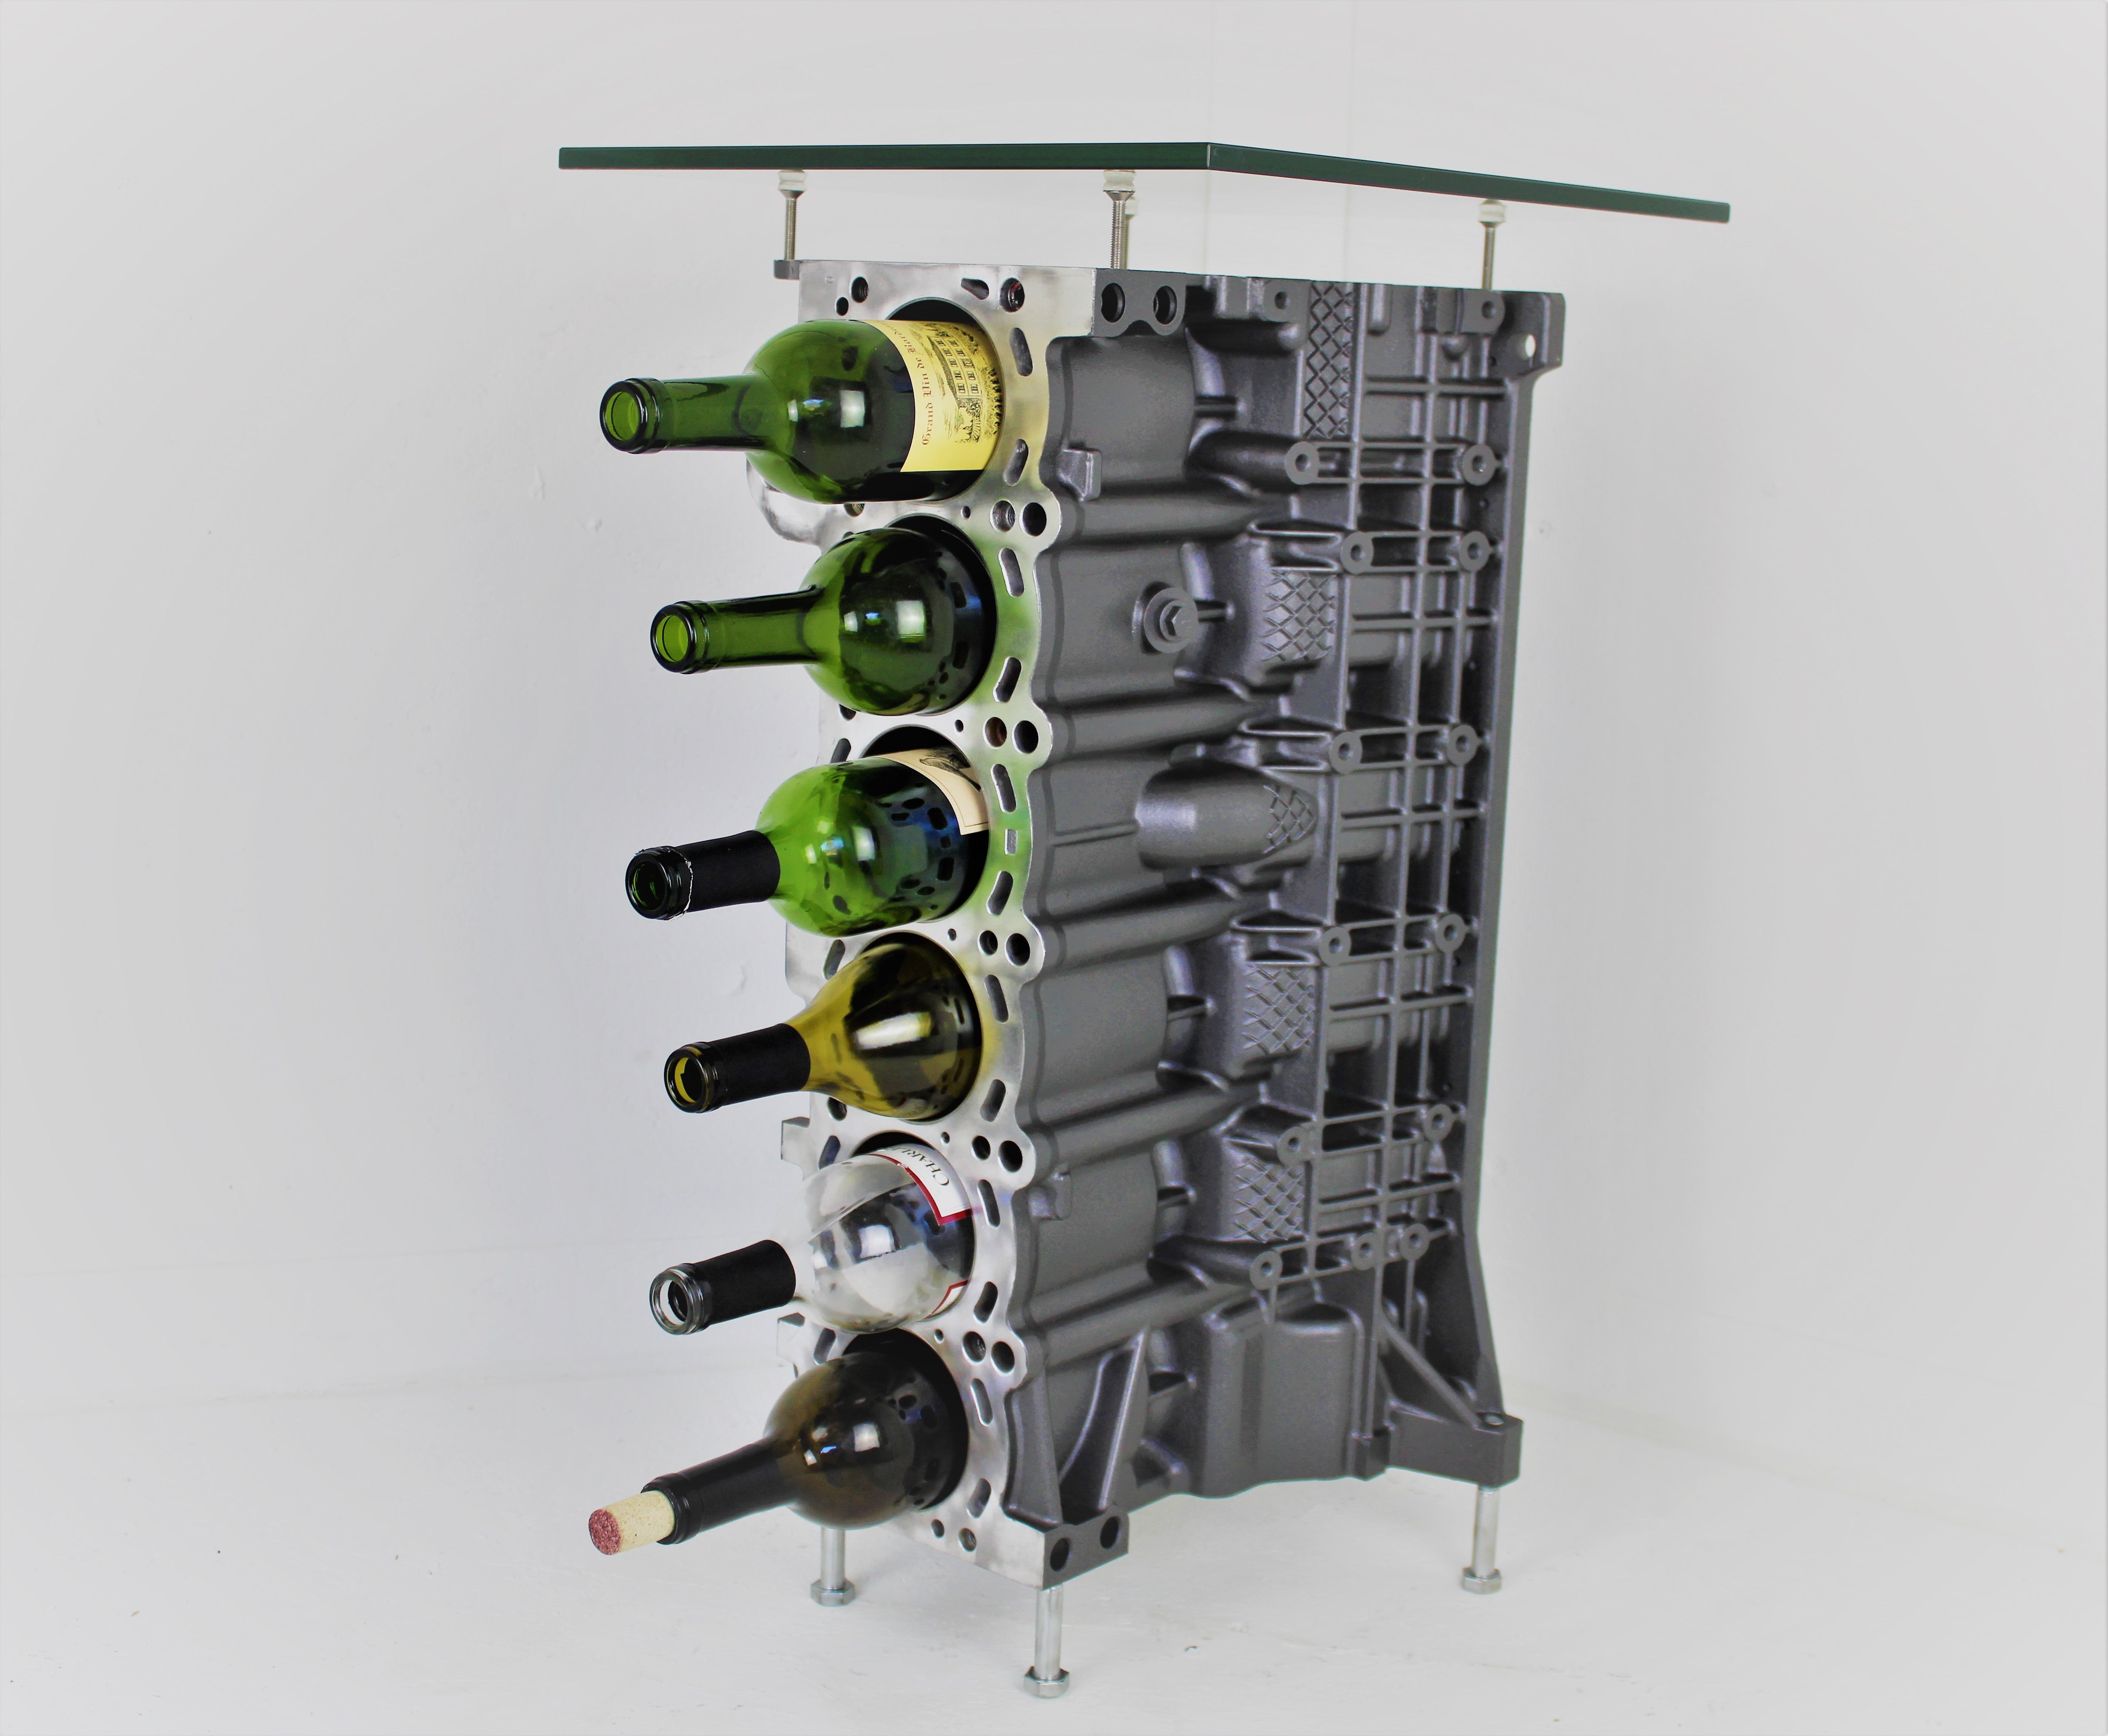 BMW Table Wine Rack - BMW Engine End Table Bottle Storage